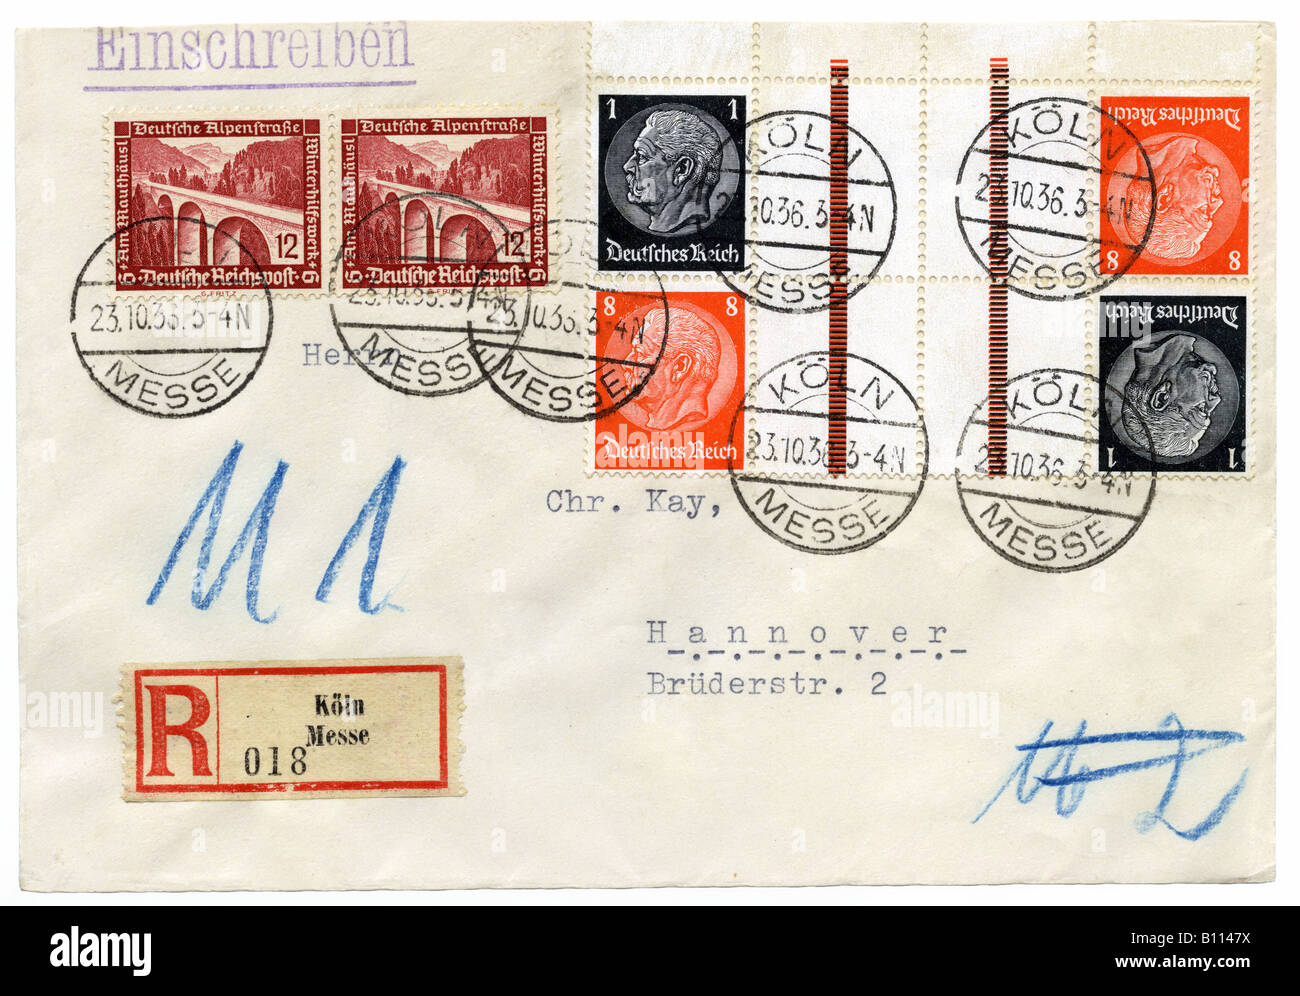 Germany Deutsches Reich Hindenburg stamps on Registered letter, postmarked Koln Messe (Exhibition Centre), 1936. Stock Photo